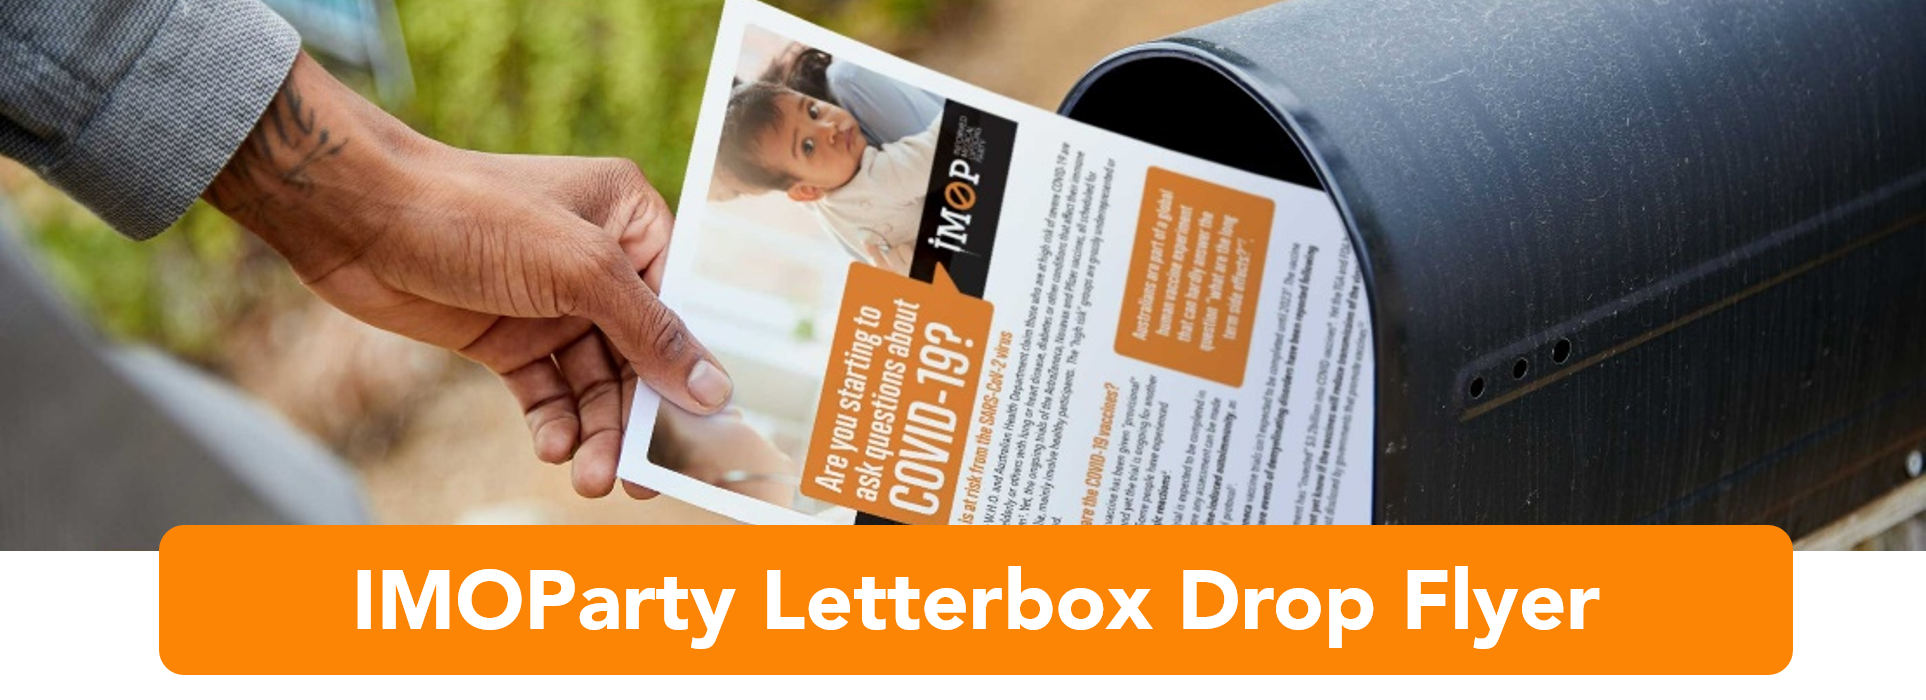 Letterbox-drop-flyer-header.png